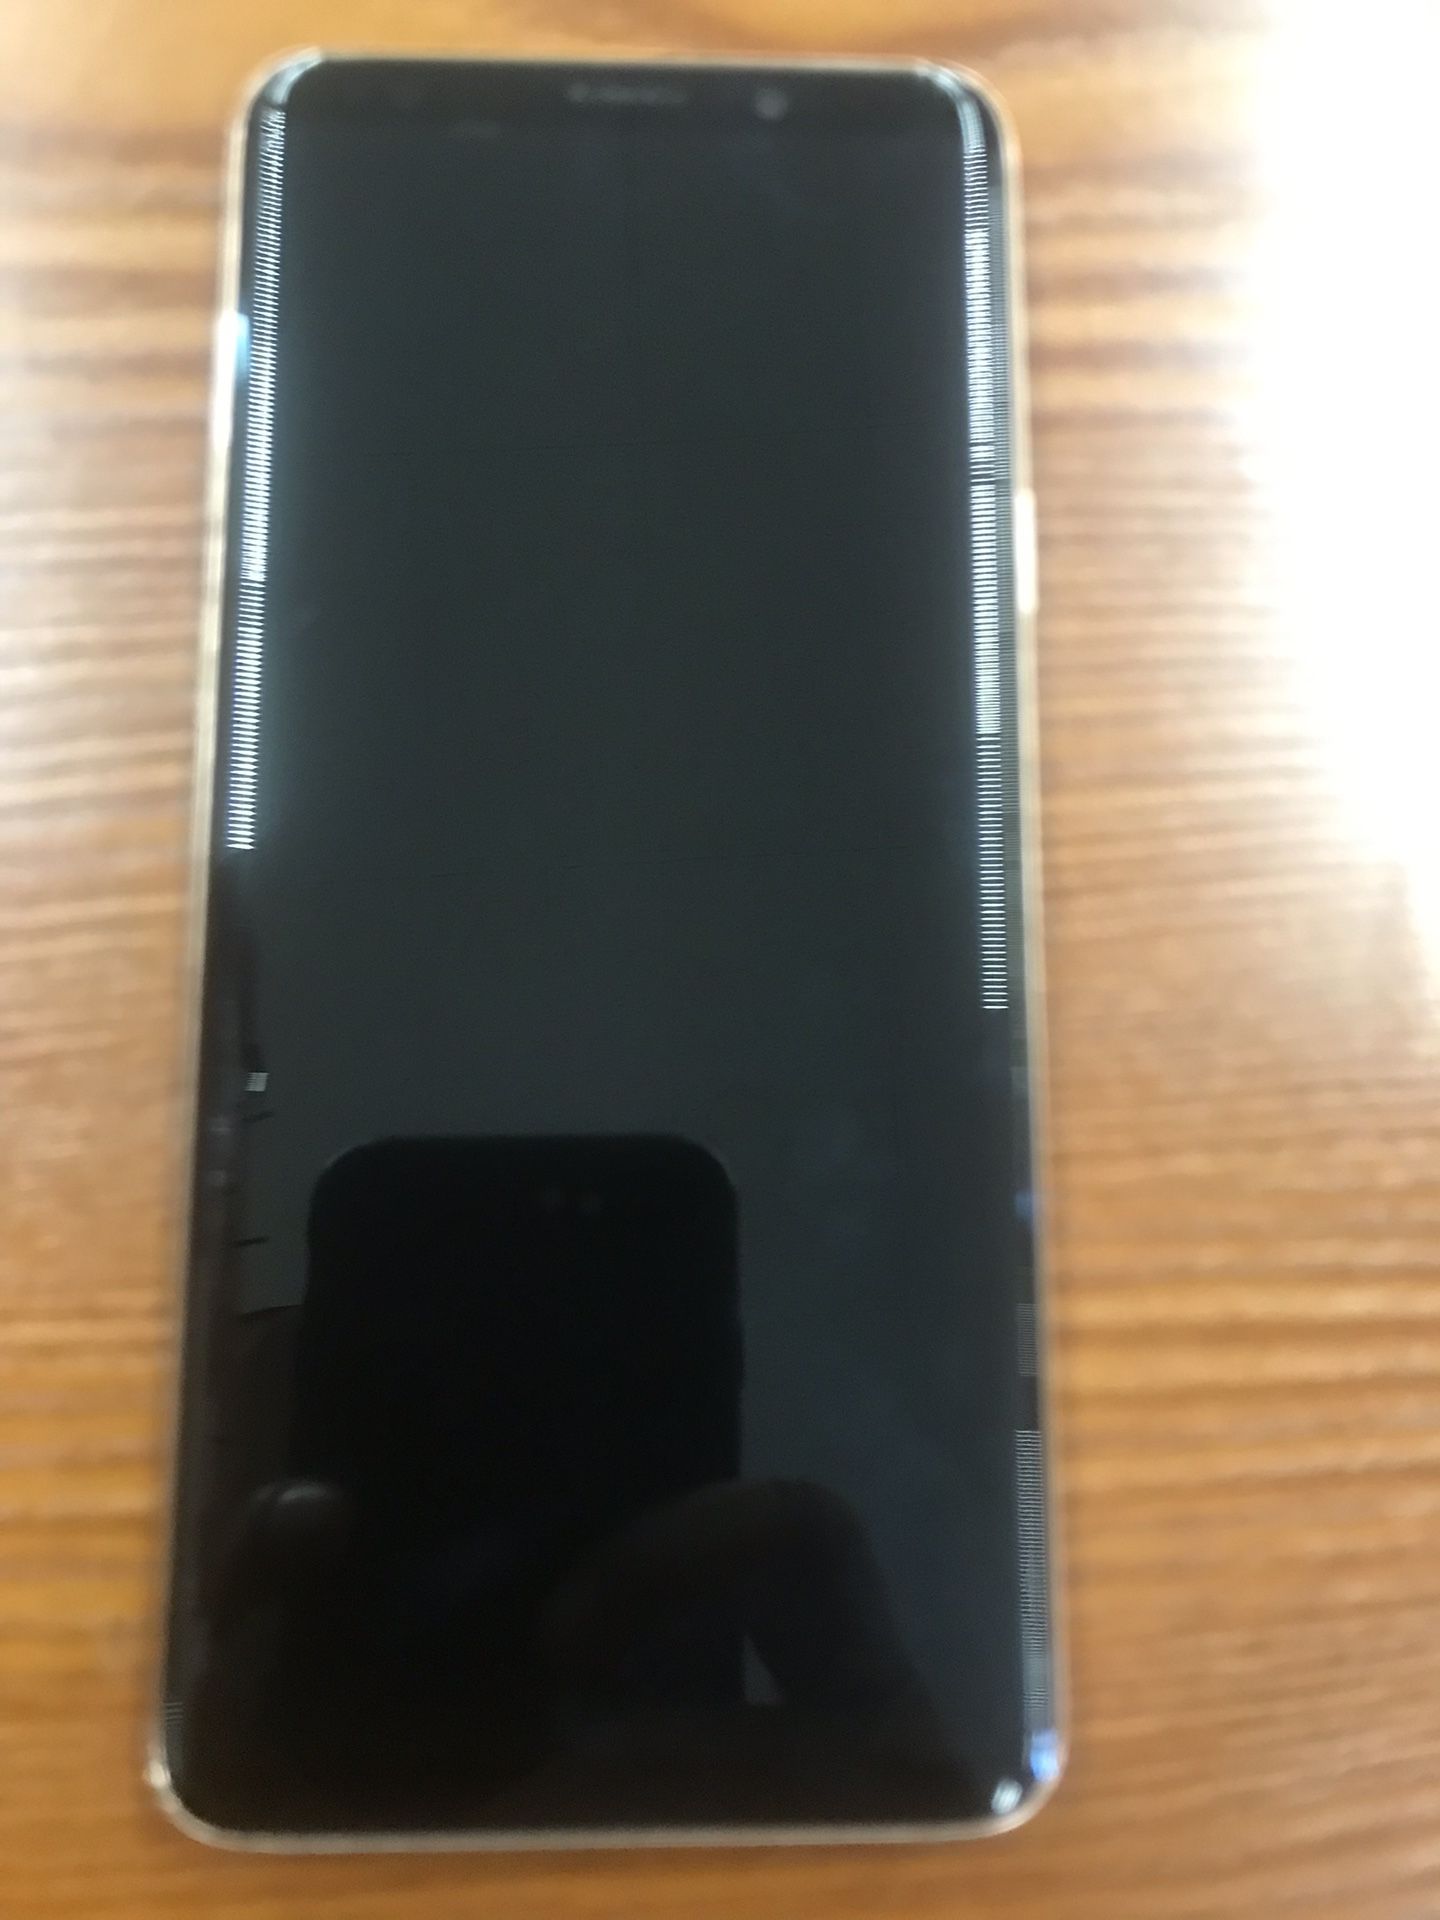 iPhone 7 32gb factory unlocked in black like new